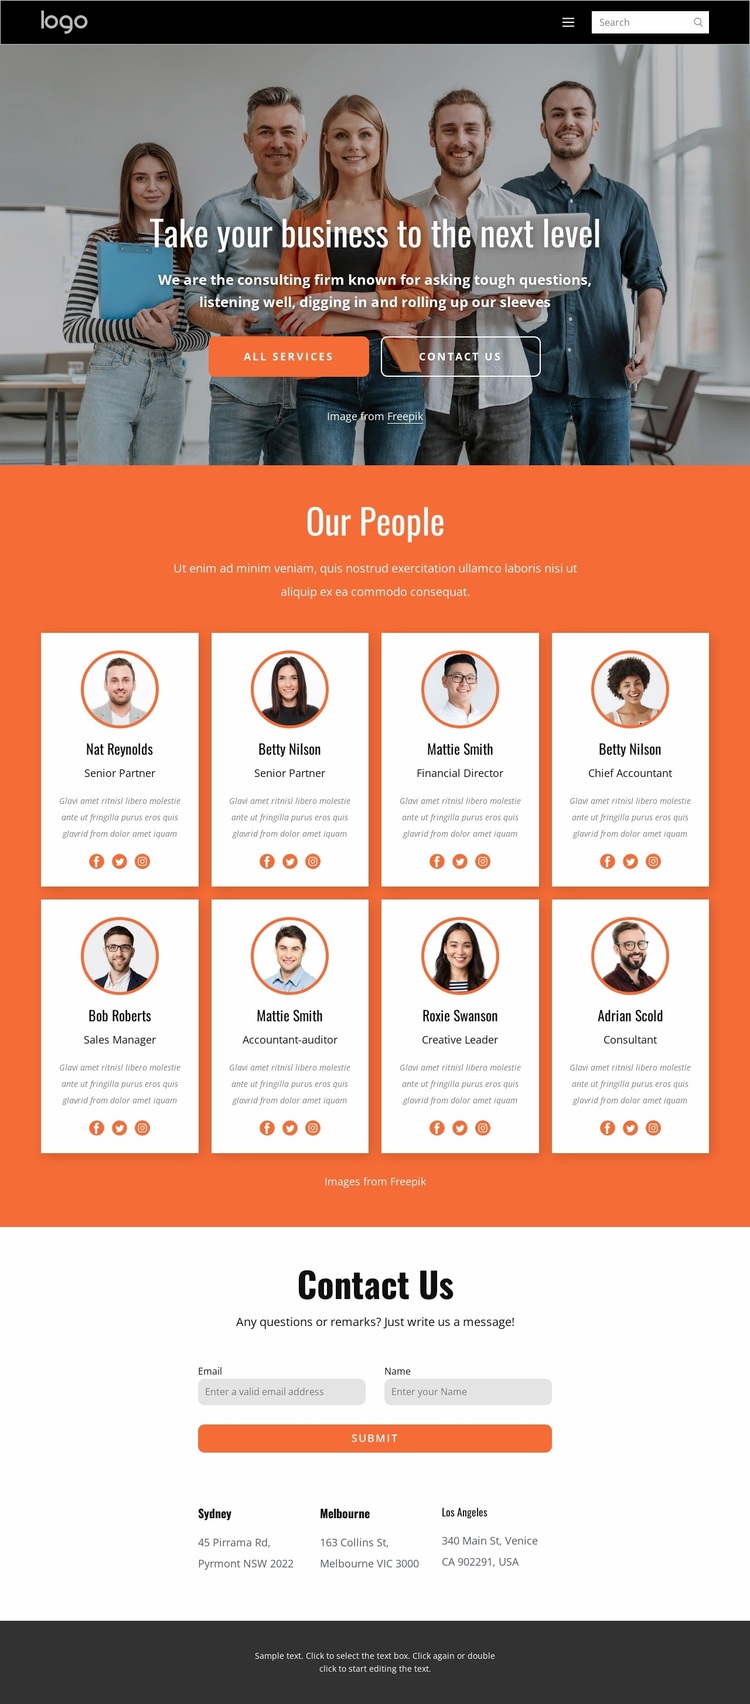 Our leadership team Website Design